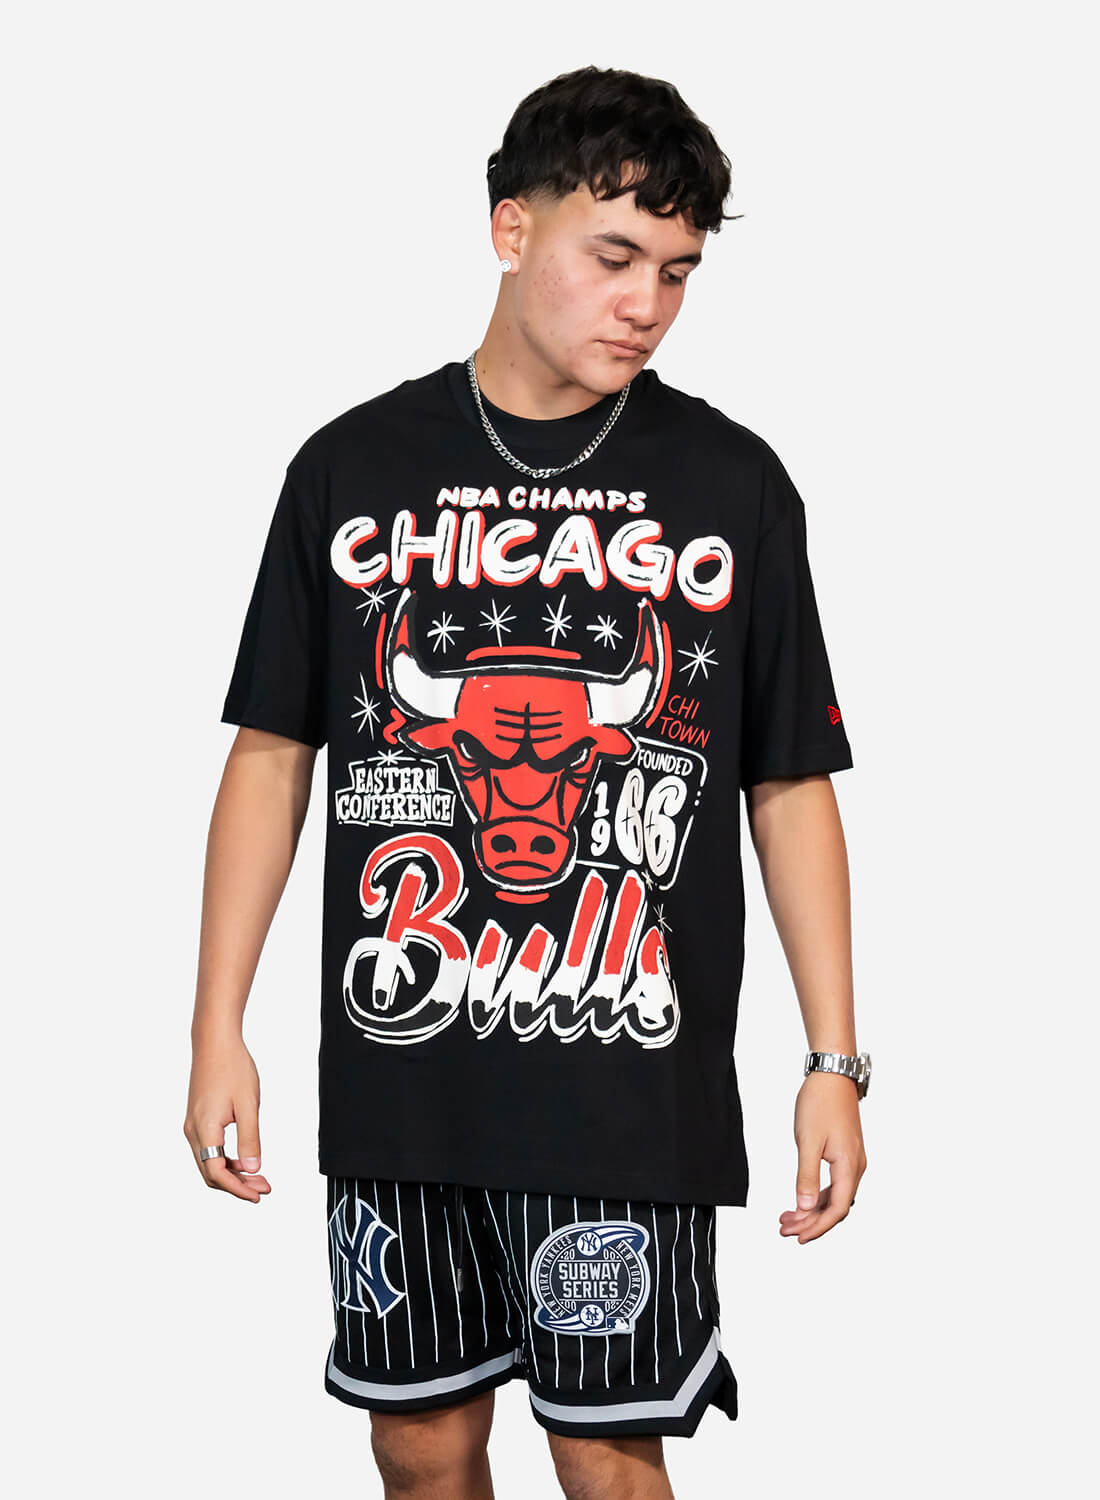 Chicago Bulls NBA Champs Oversized T-Shirt